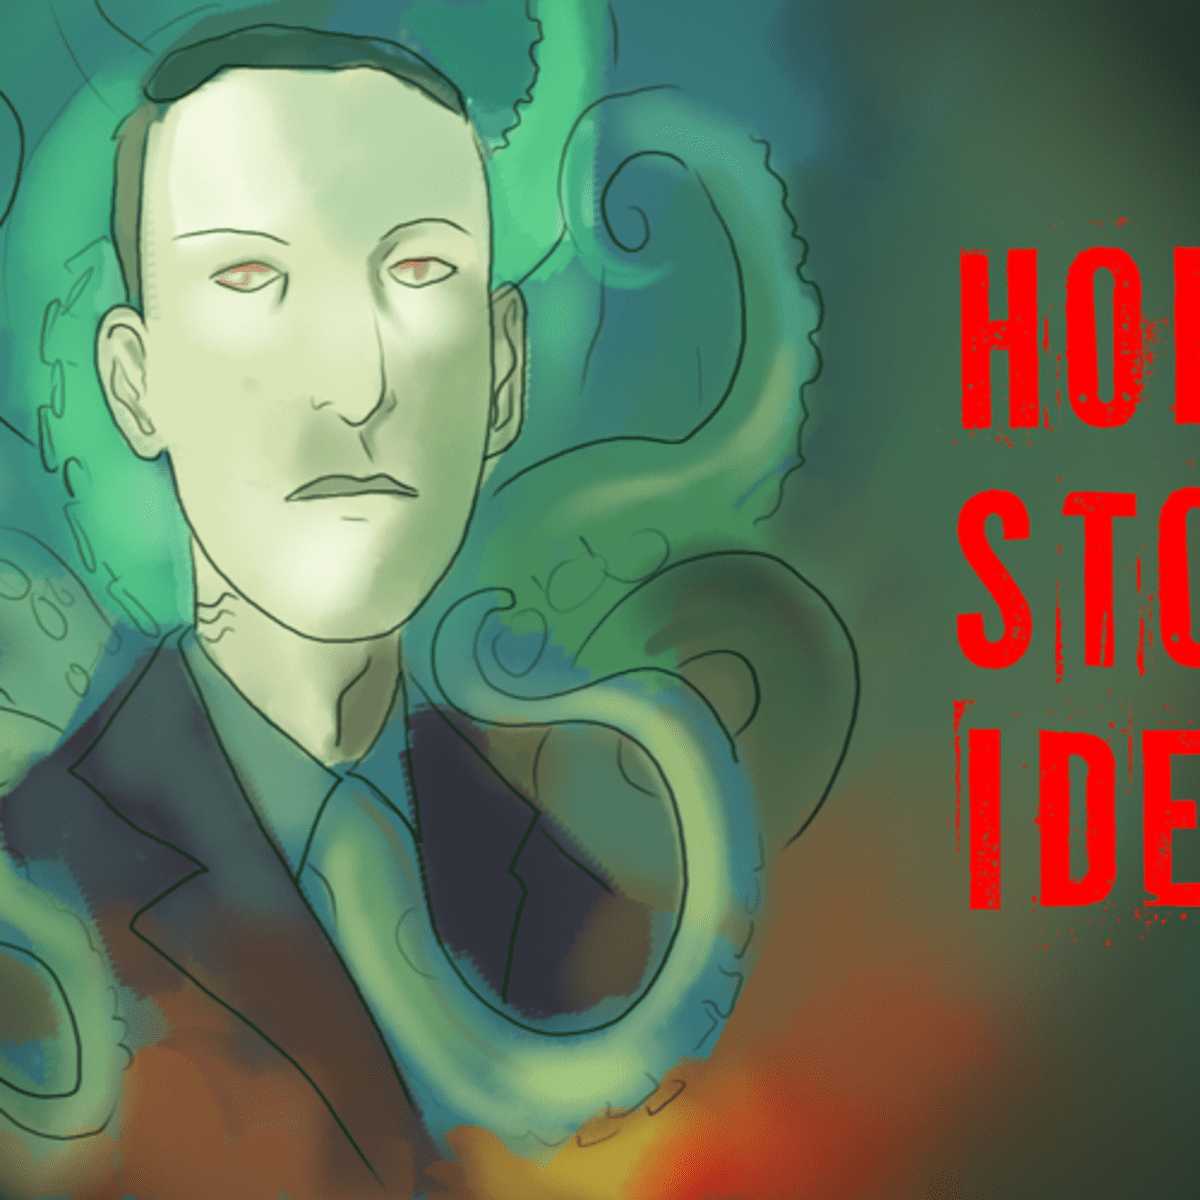 Horror Story Ideas: Writing to Scare People - HobbyLark